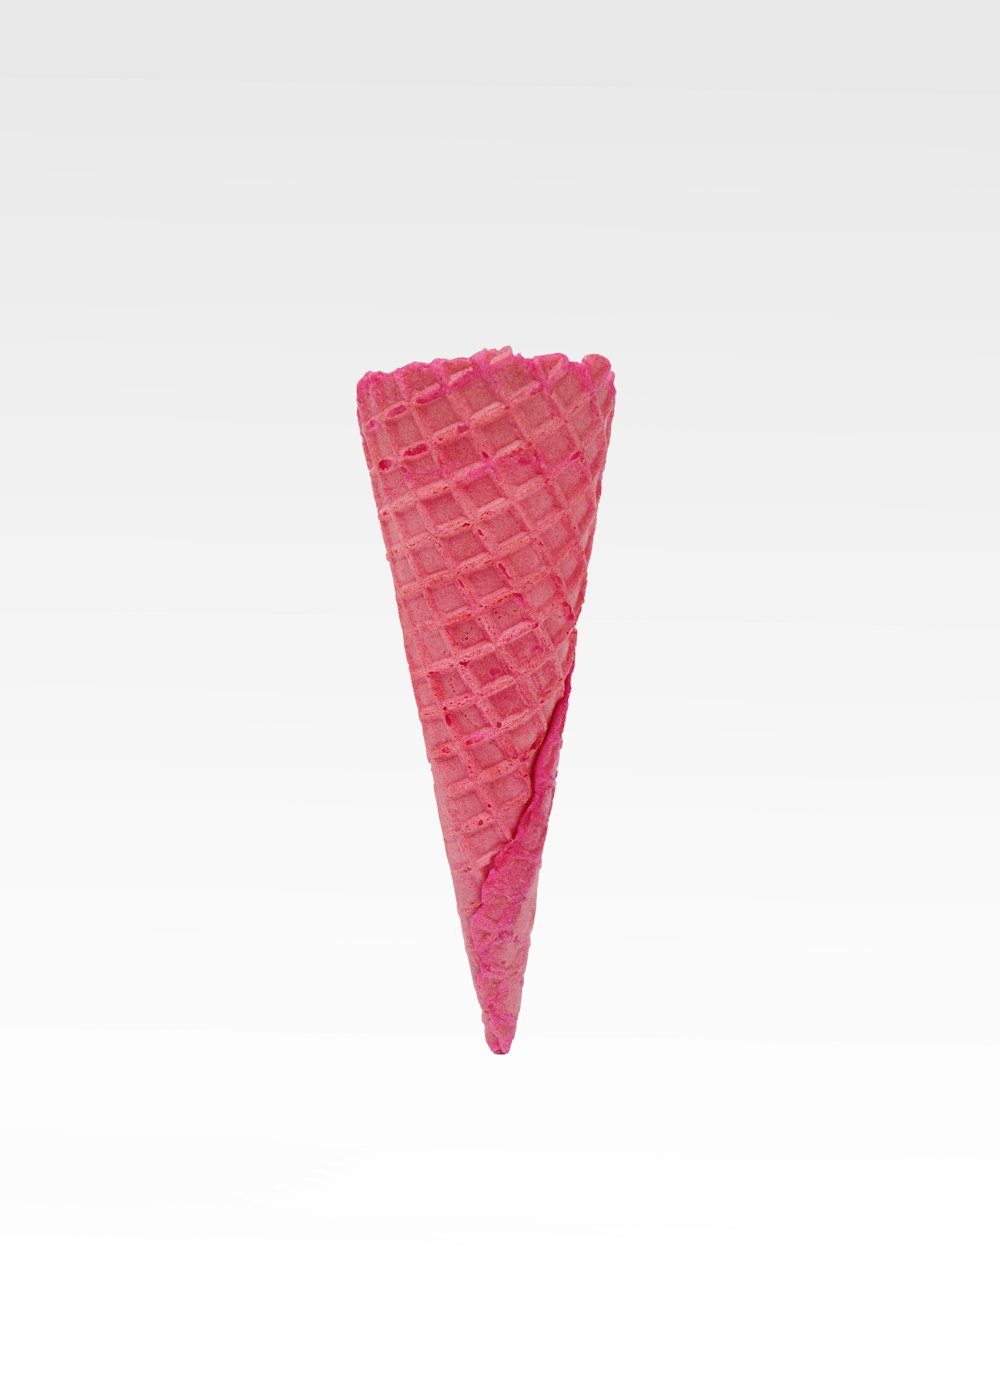 pink cone ice cream on white background